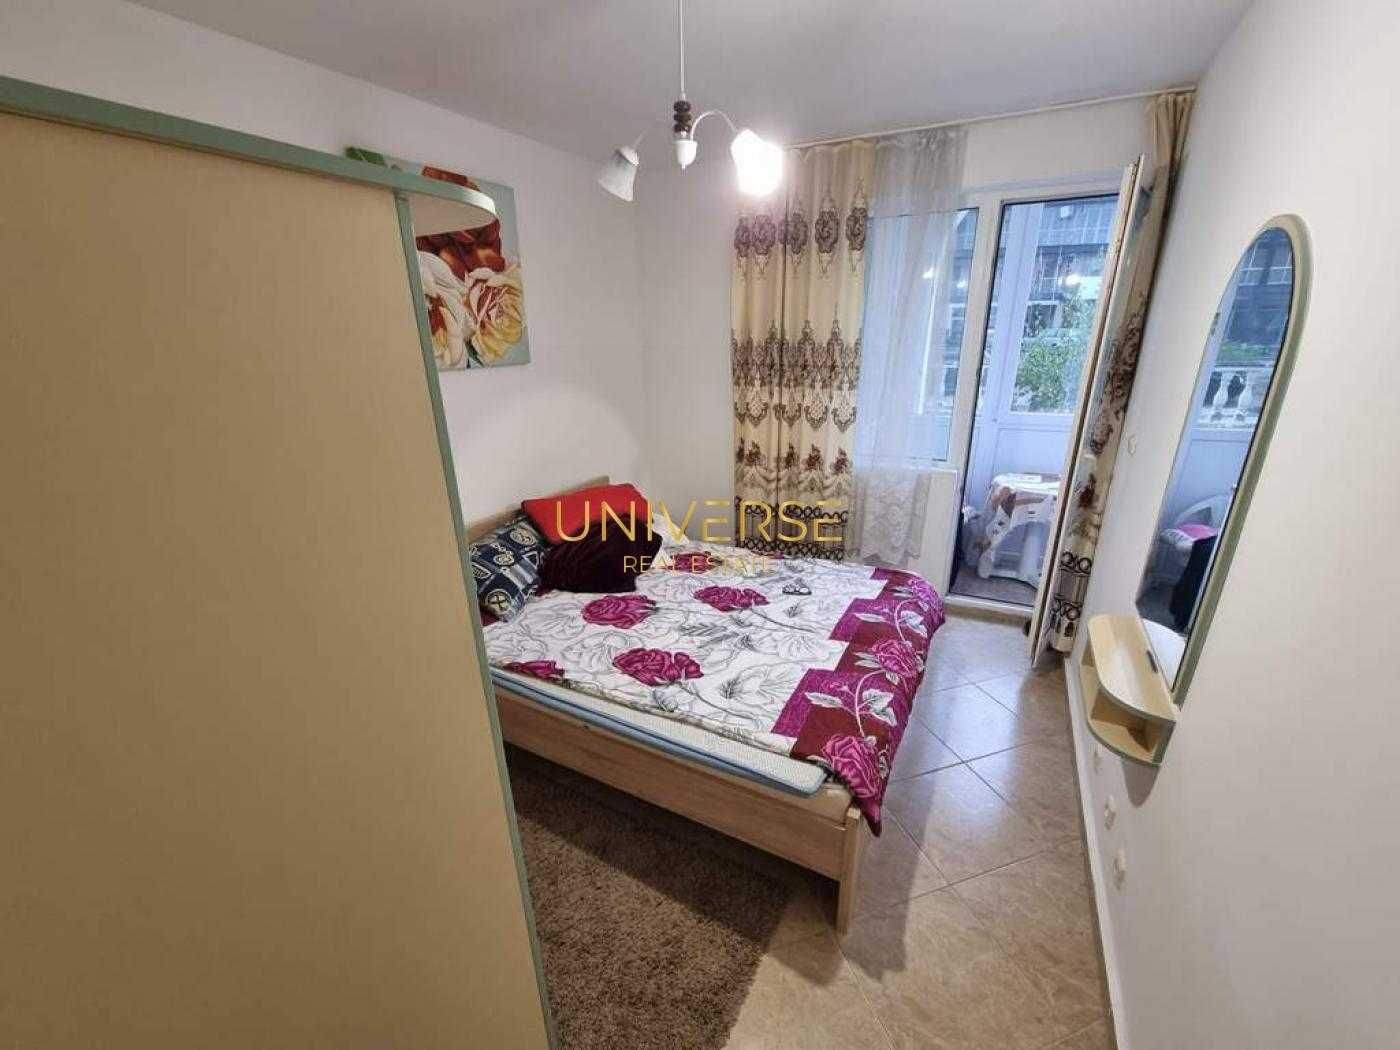 Тристаен апартамент в жилищен комплекс в Слънчев бряг #1518